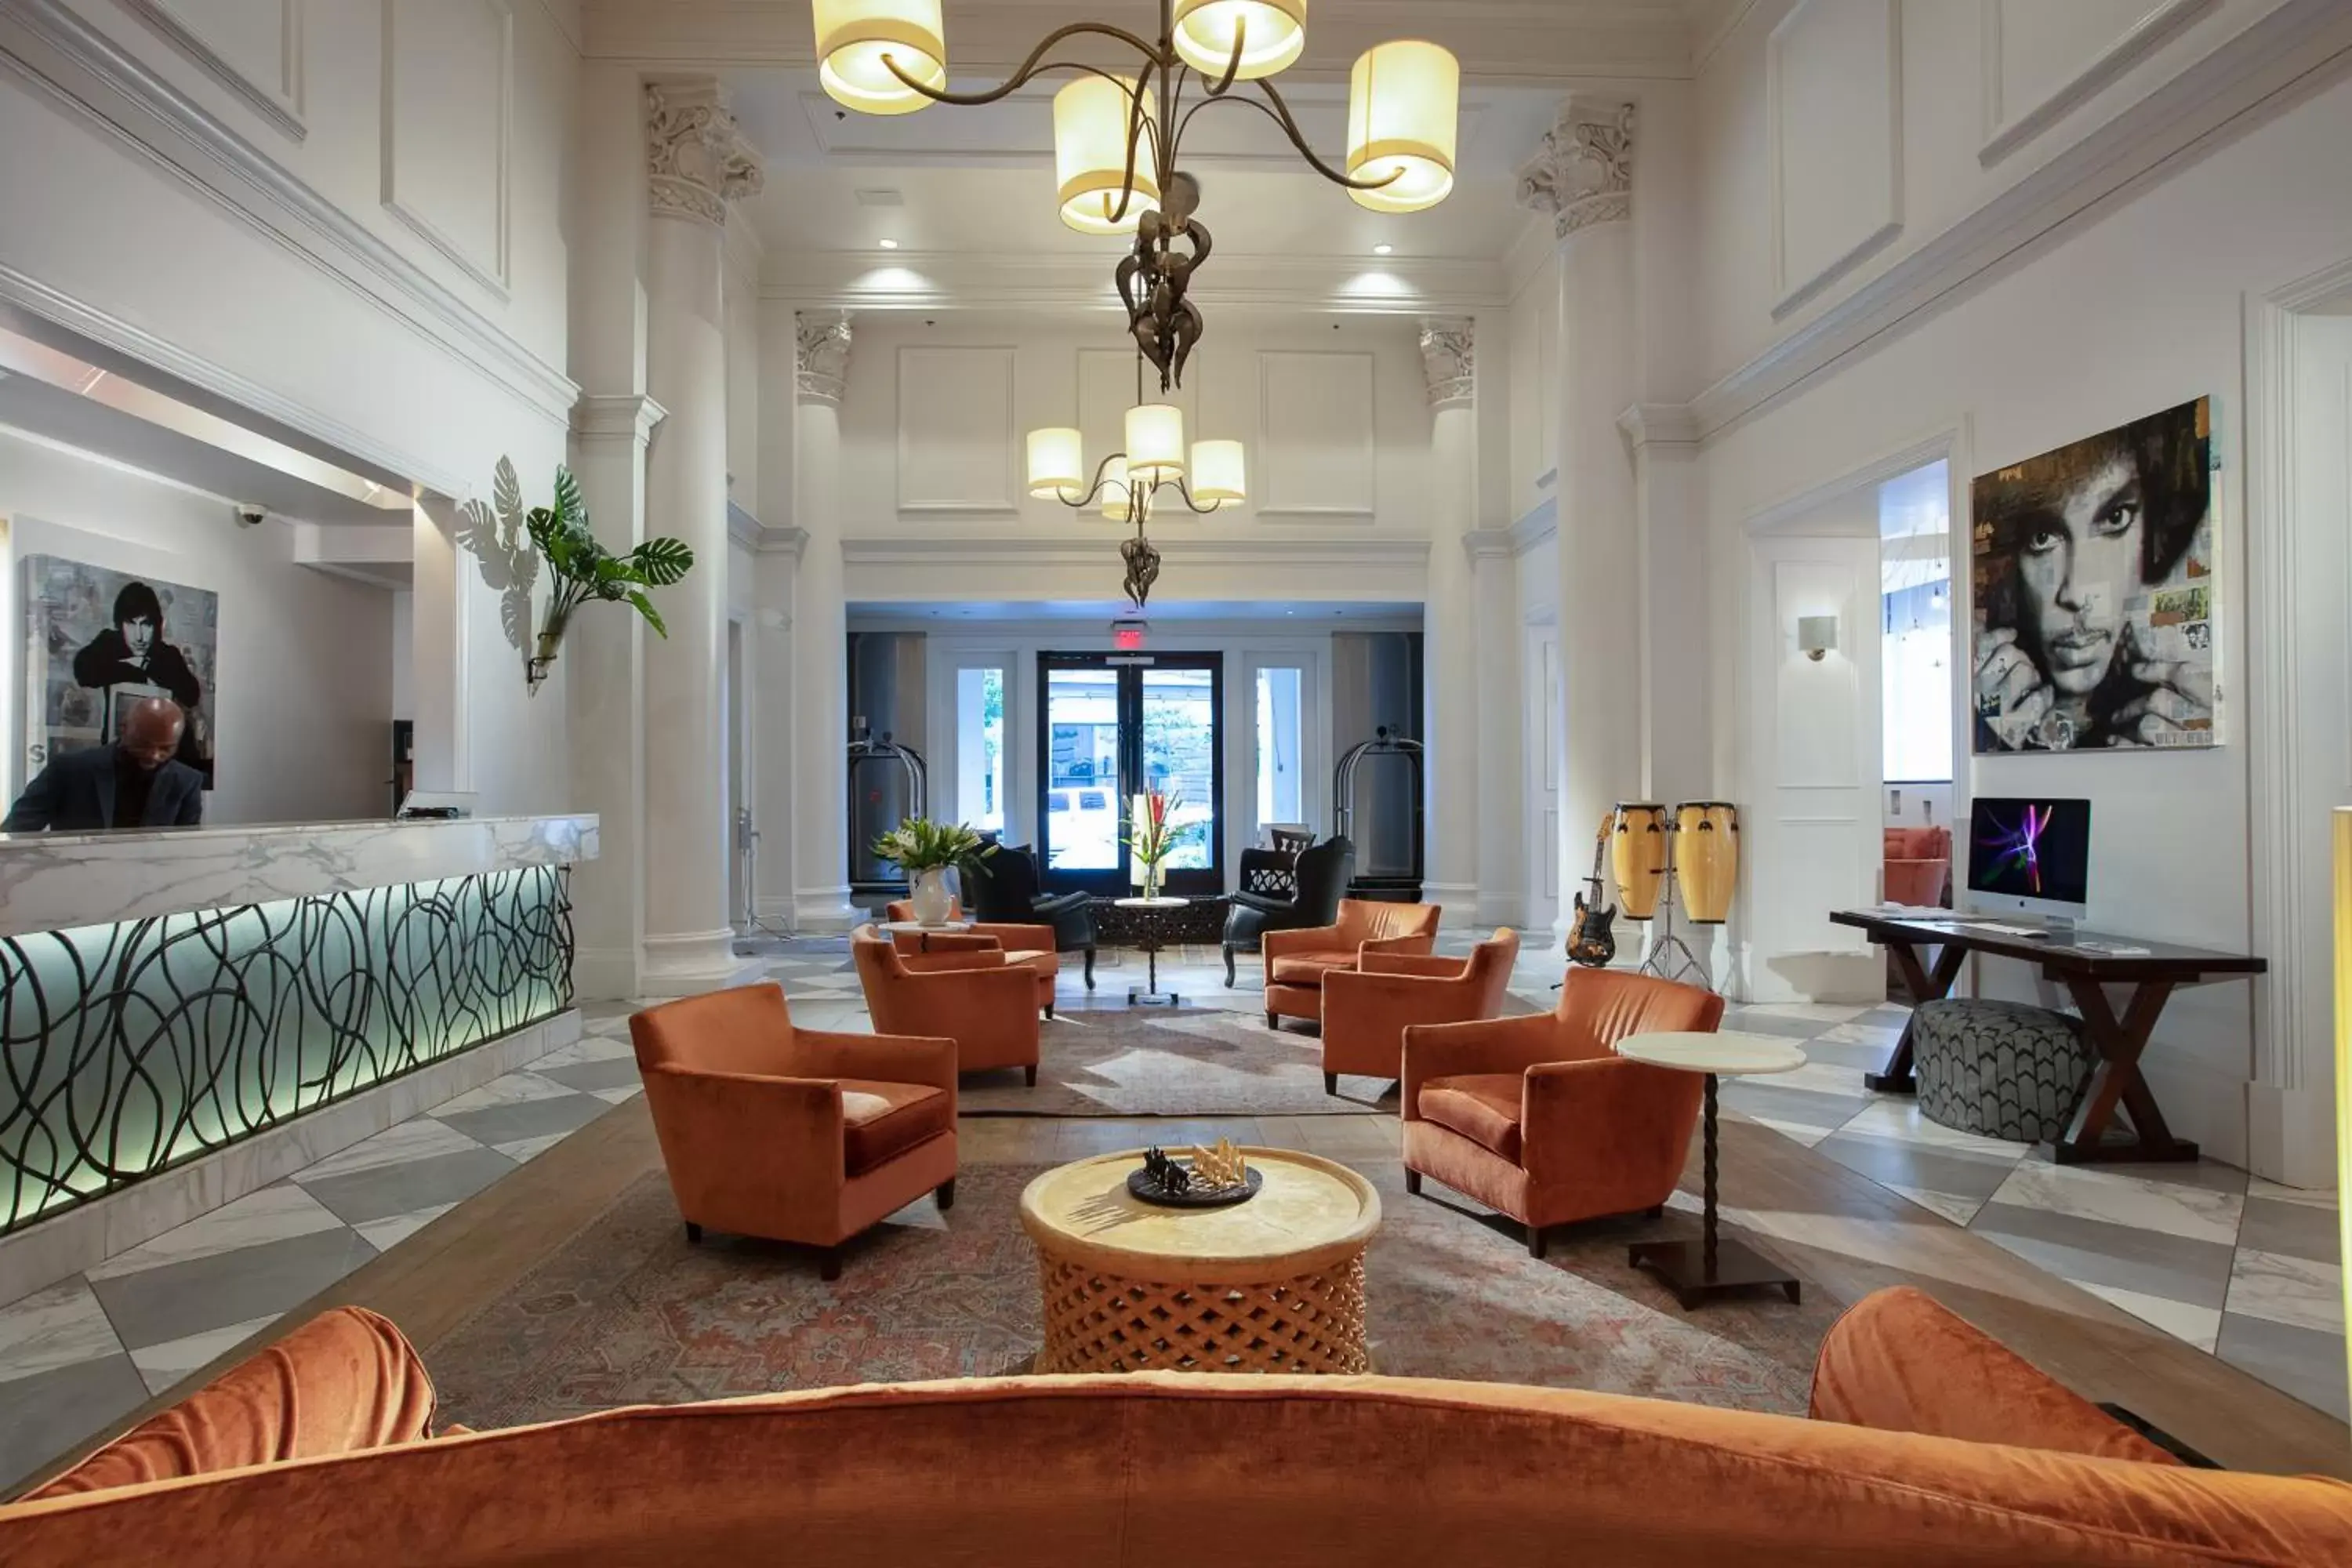 Lobby or reception in International House Hotel